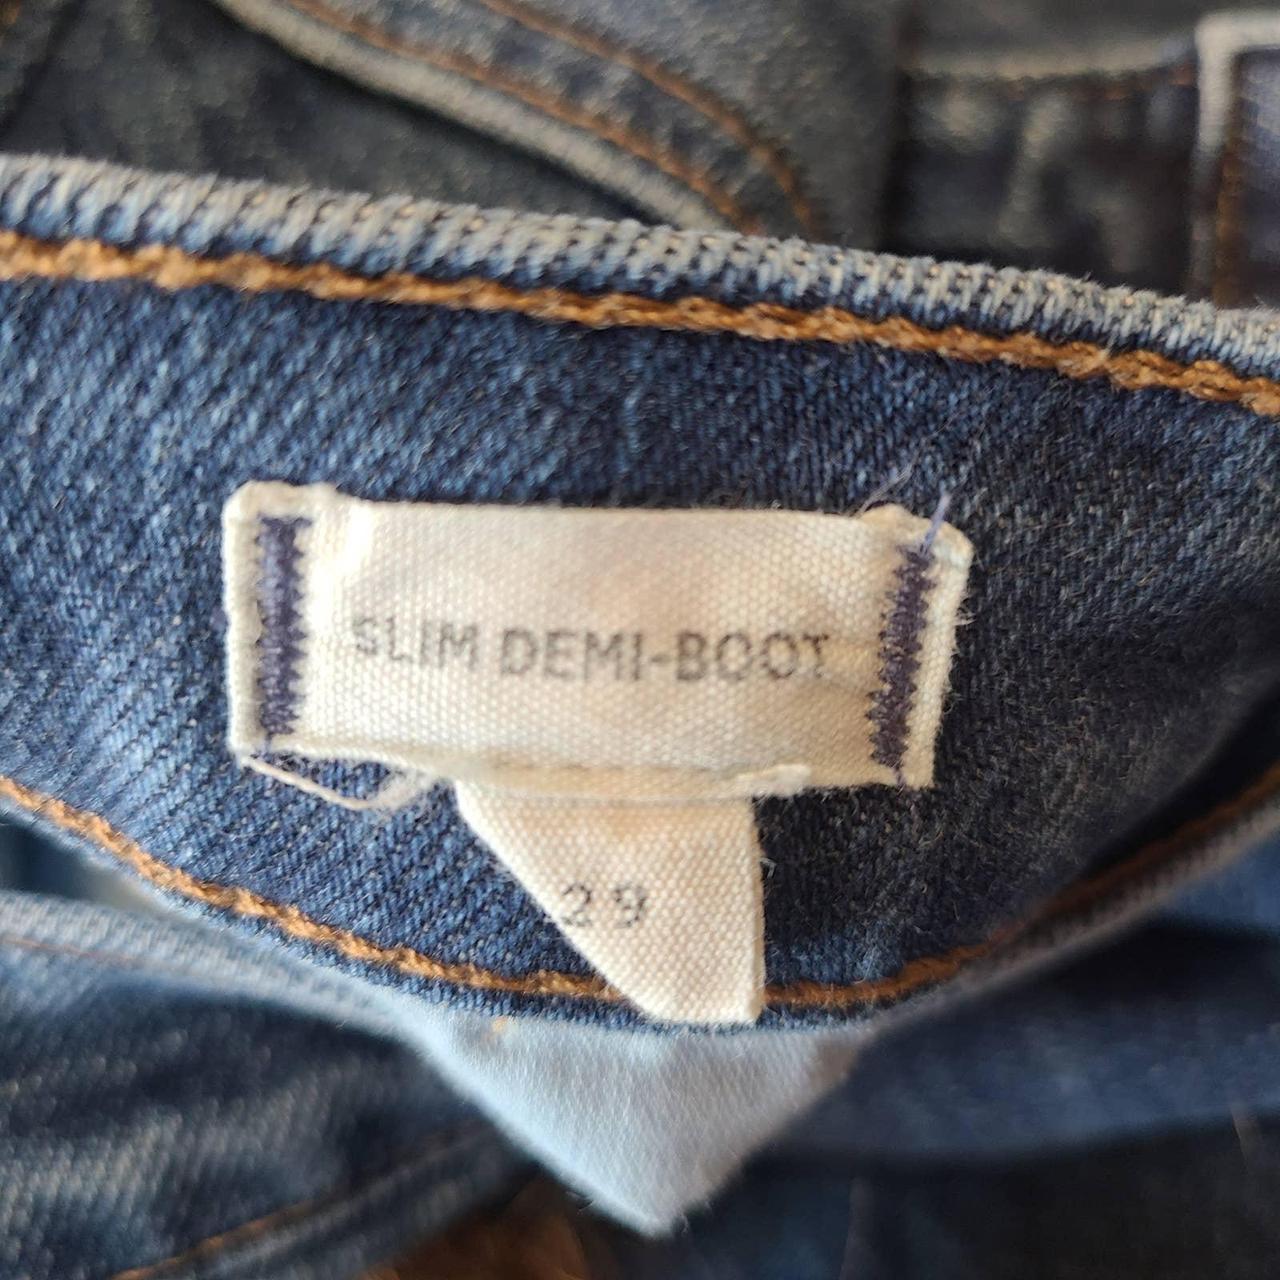 Women's Slim Demi-Boot Jeans in Sundale Wash